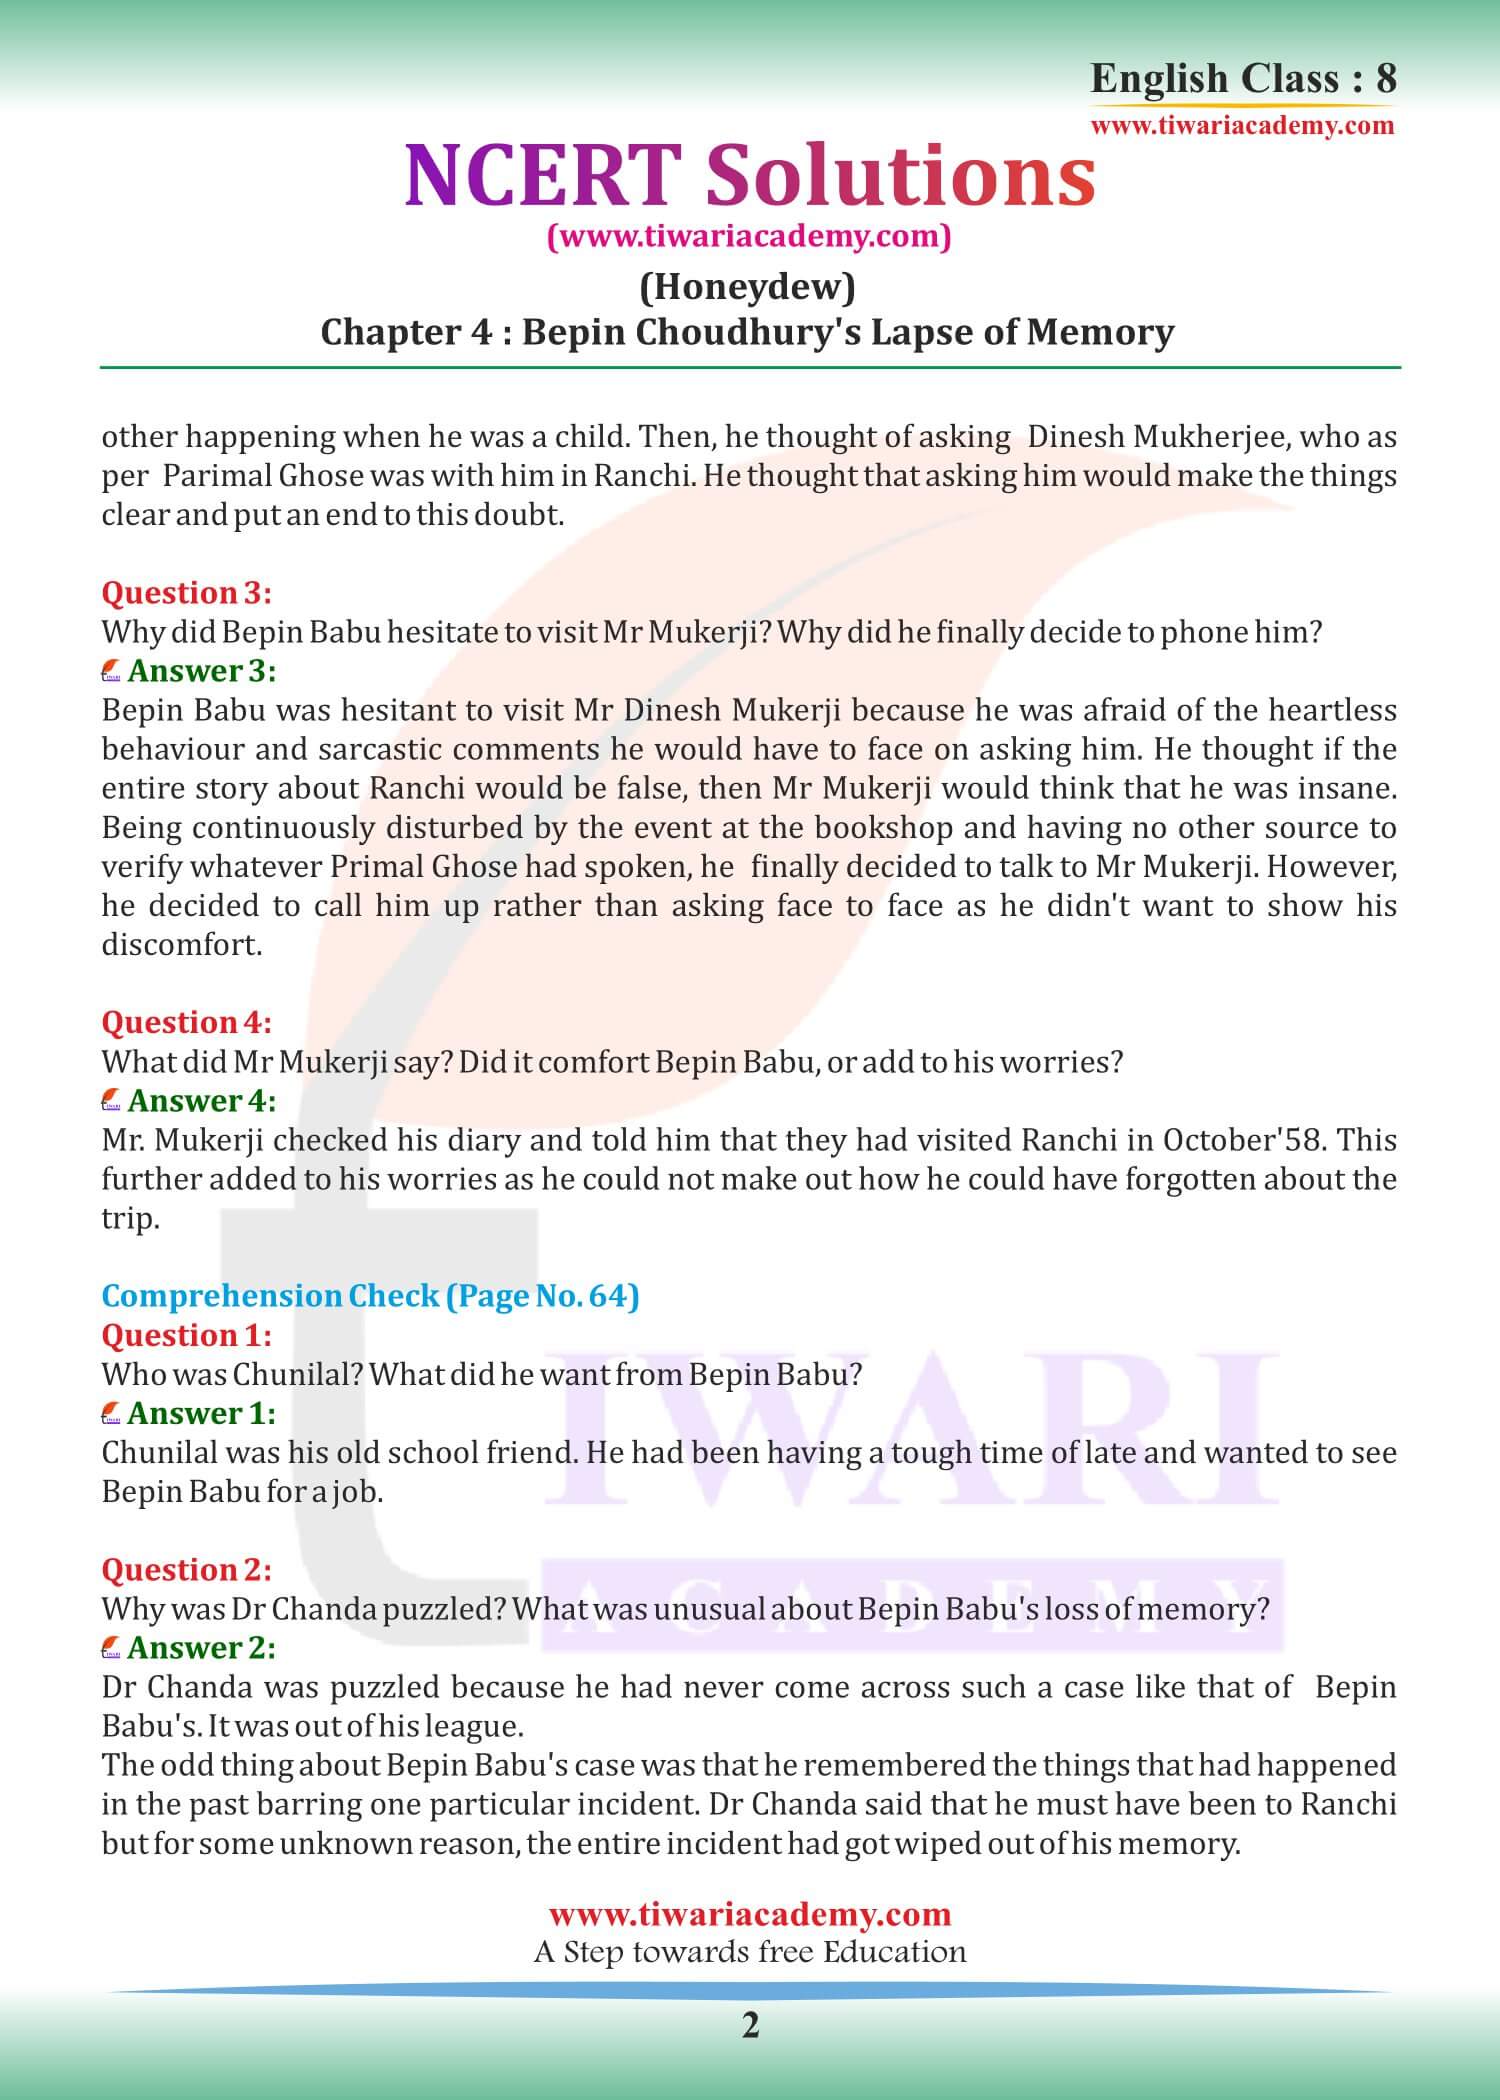 Class 8 English Honeydew Chapter 4 Bepin Chaudhury Lapse of Memory